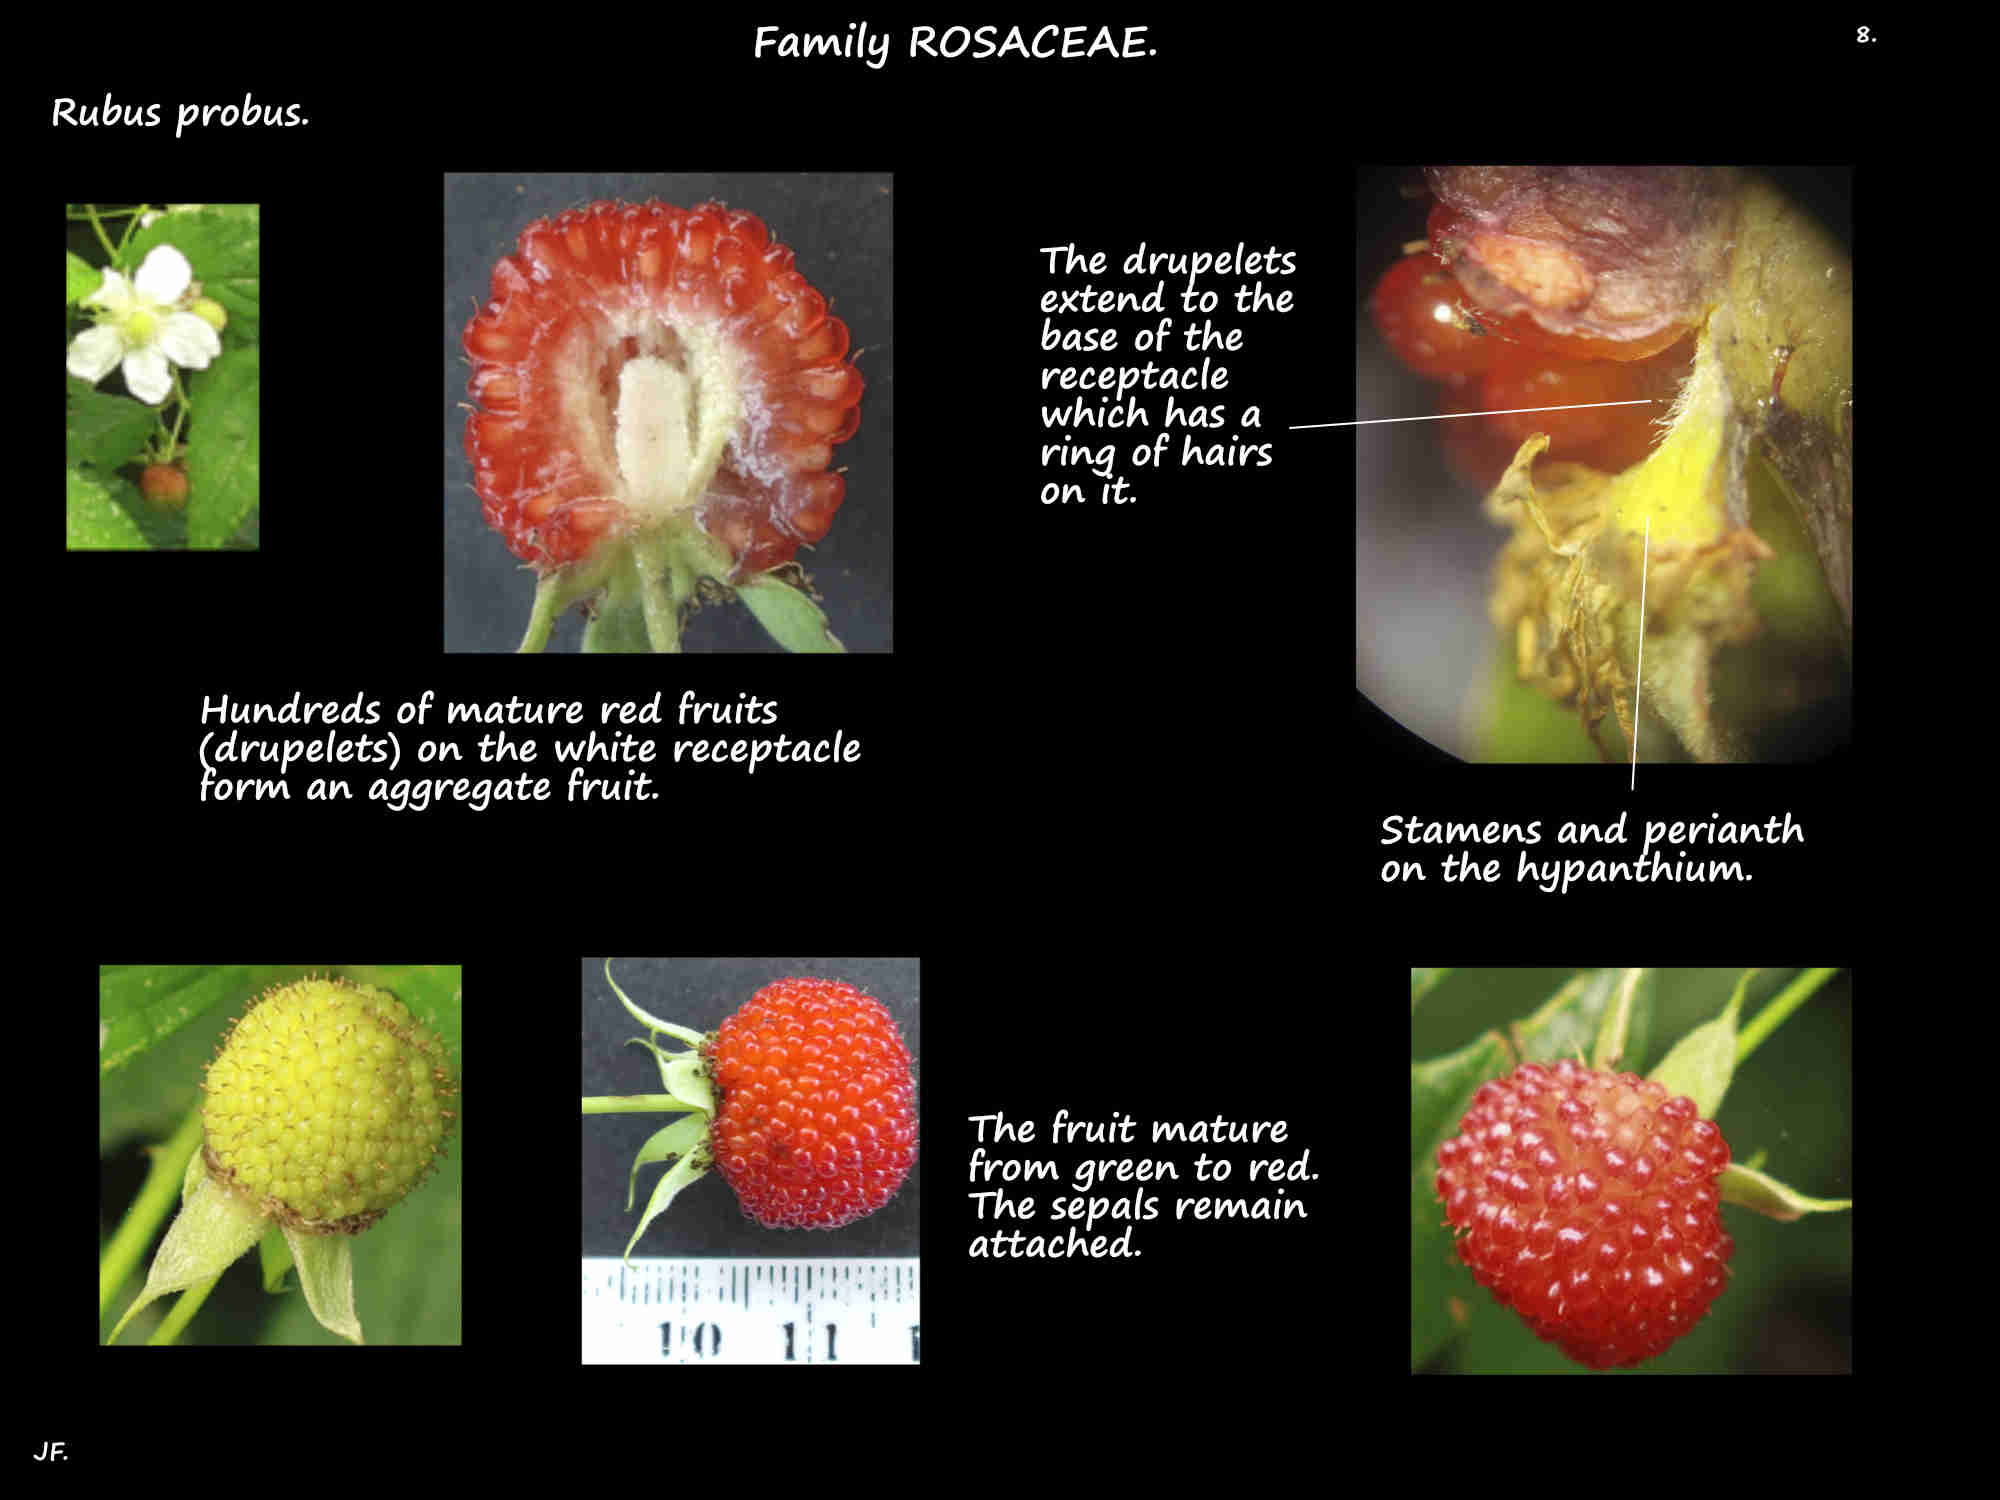 8 Rubus probus druplets in the aggregate fruit